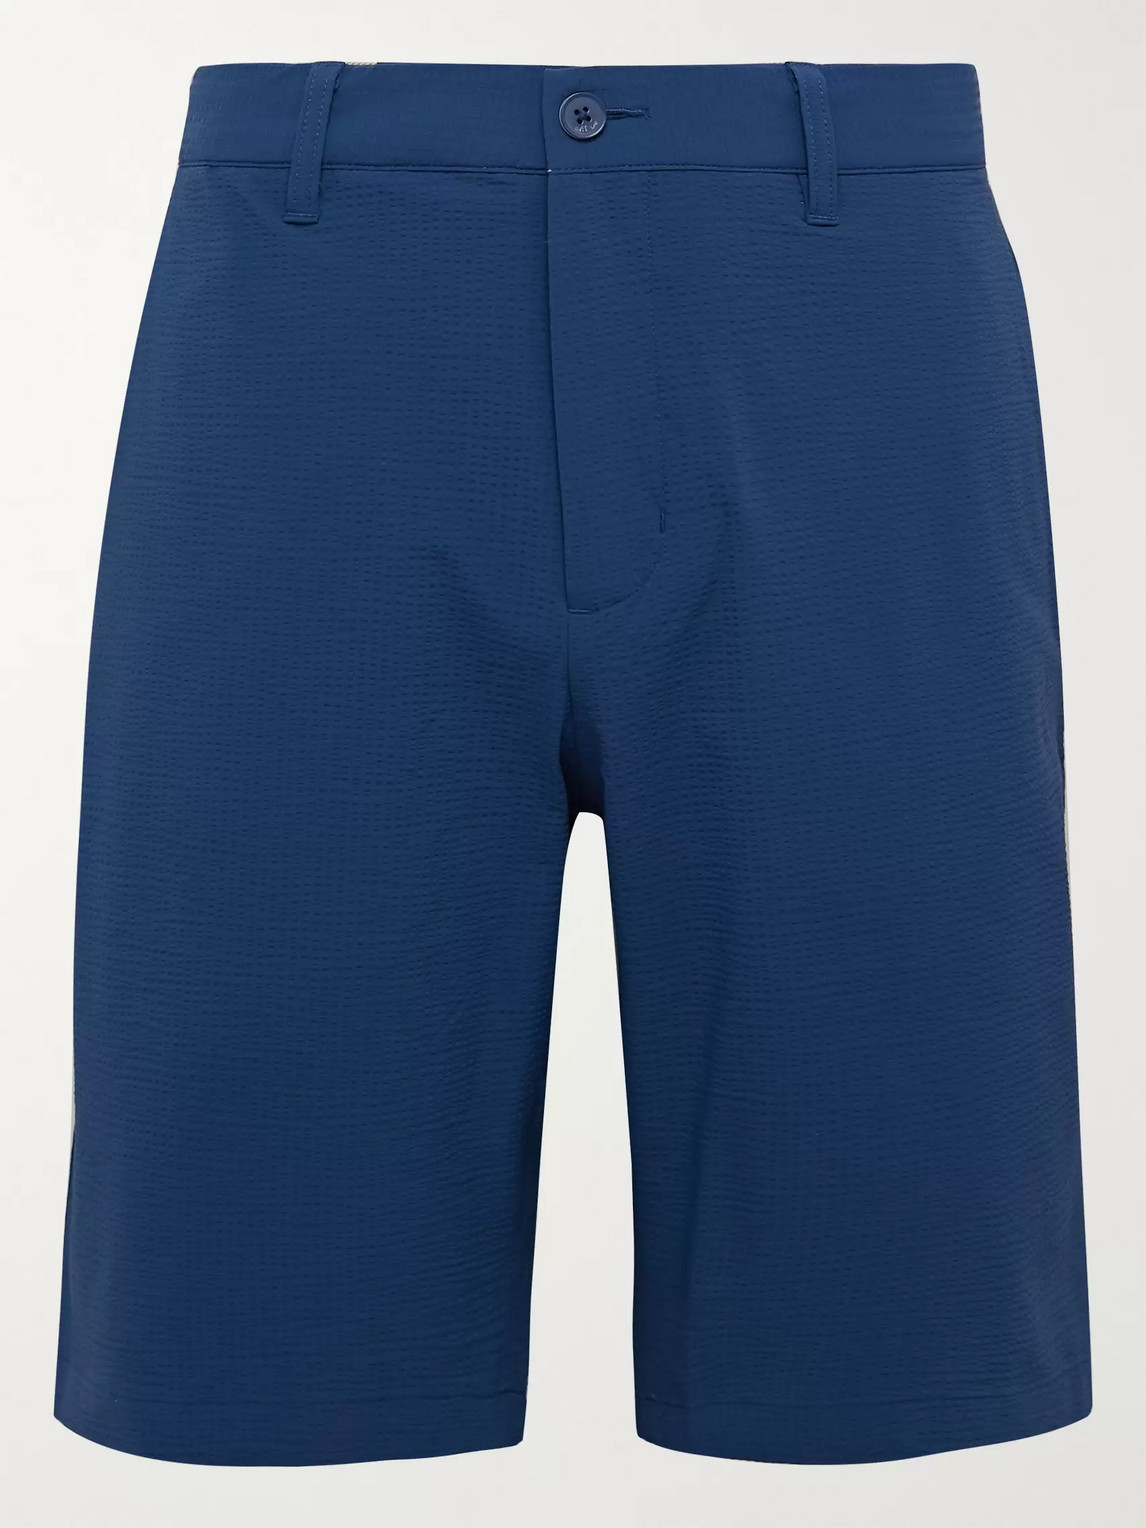 Adidas Golf Adipure Slim-fit Stretch-seersucker Golf Shorts In Blue